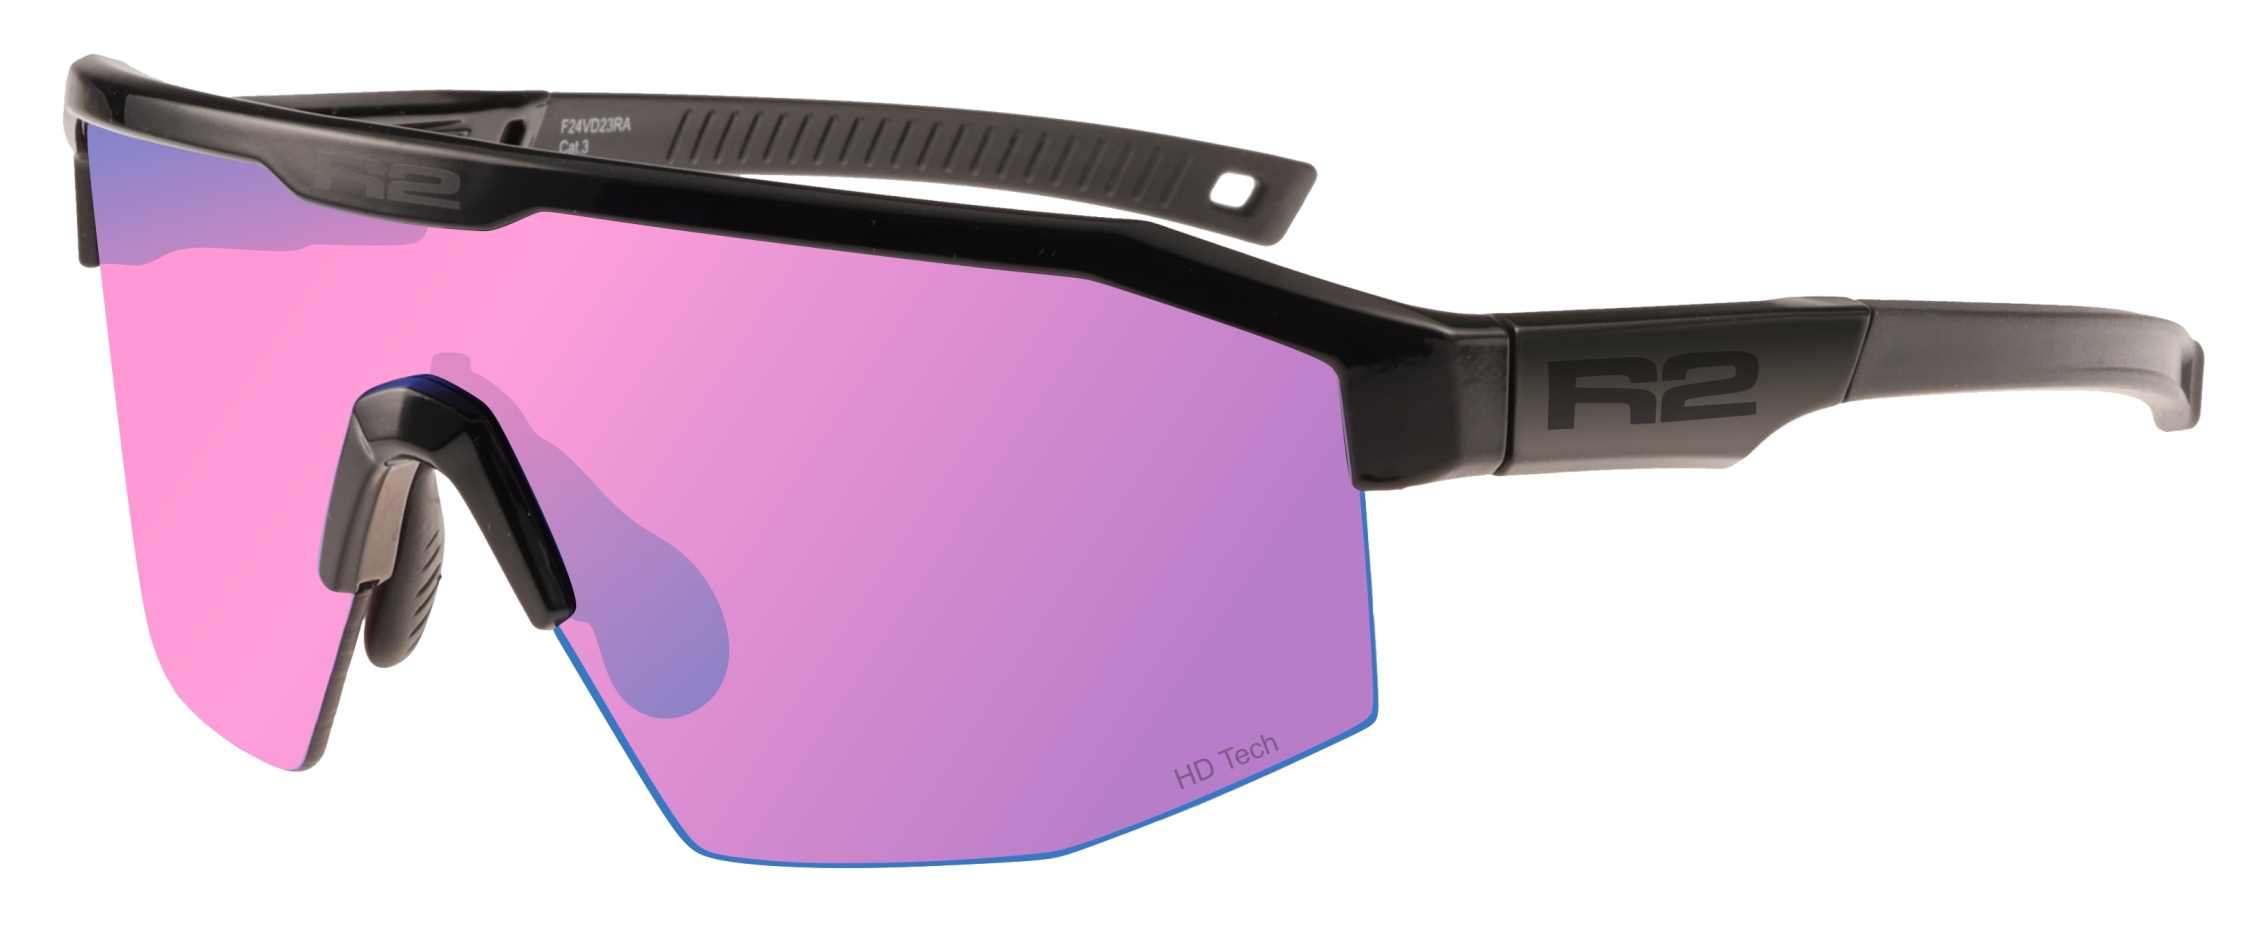 HD sport sunglasses R2 GAIN AT108A standard